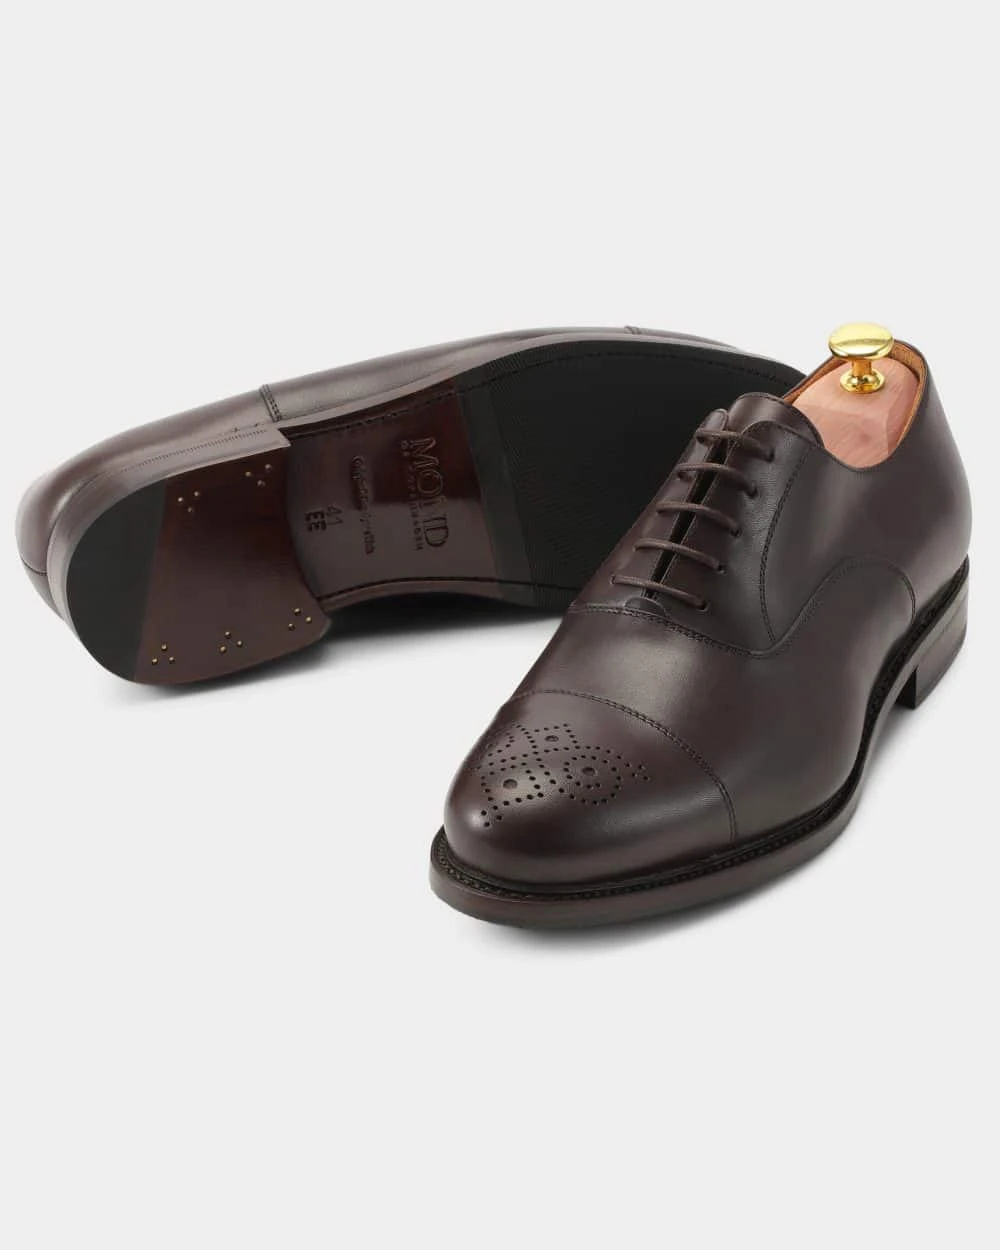 leather mensshoes / Leder Herrenschuhe / herre sko